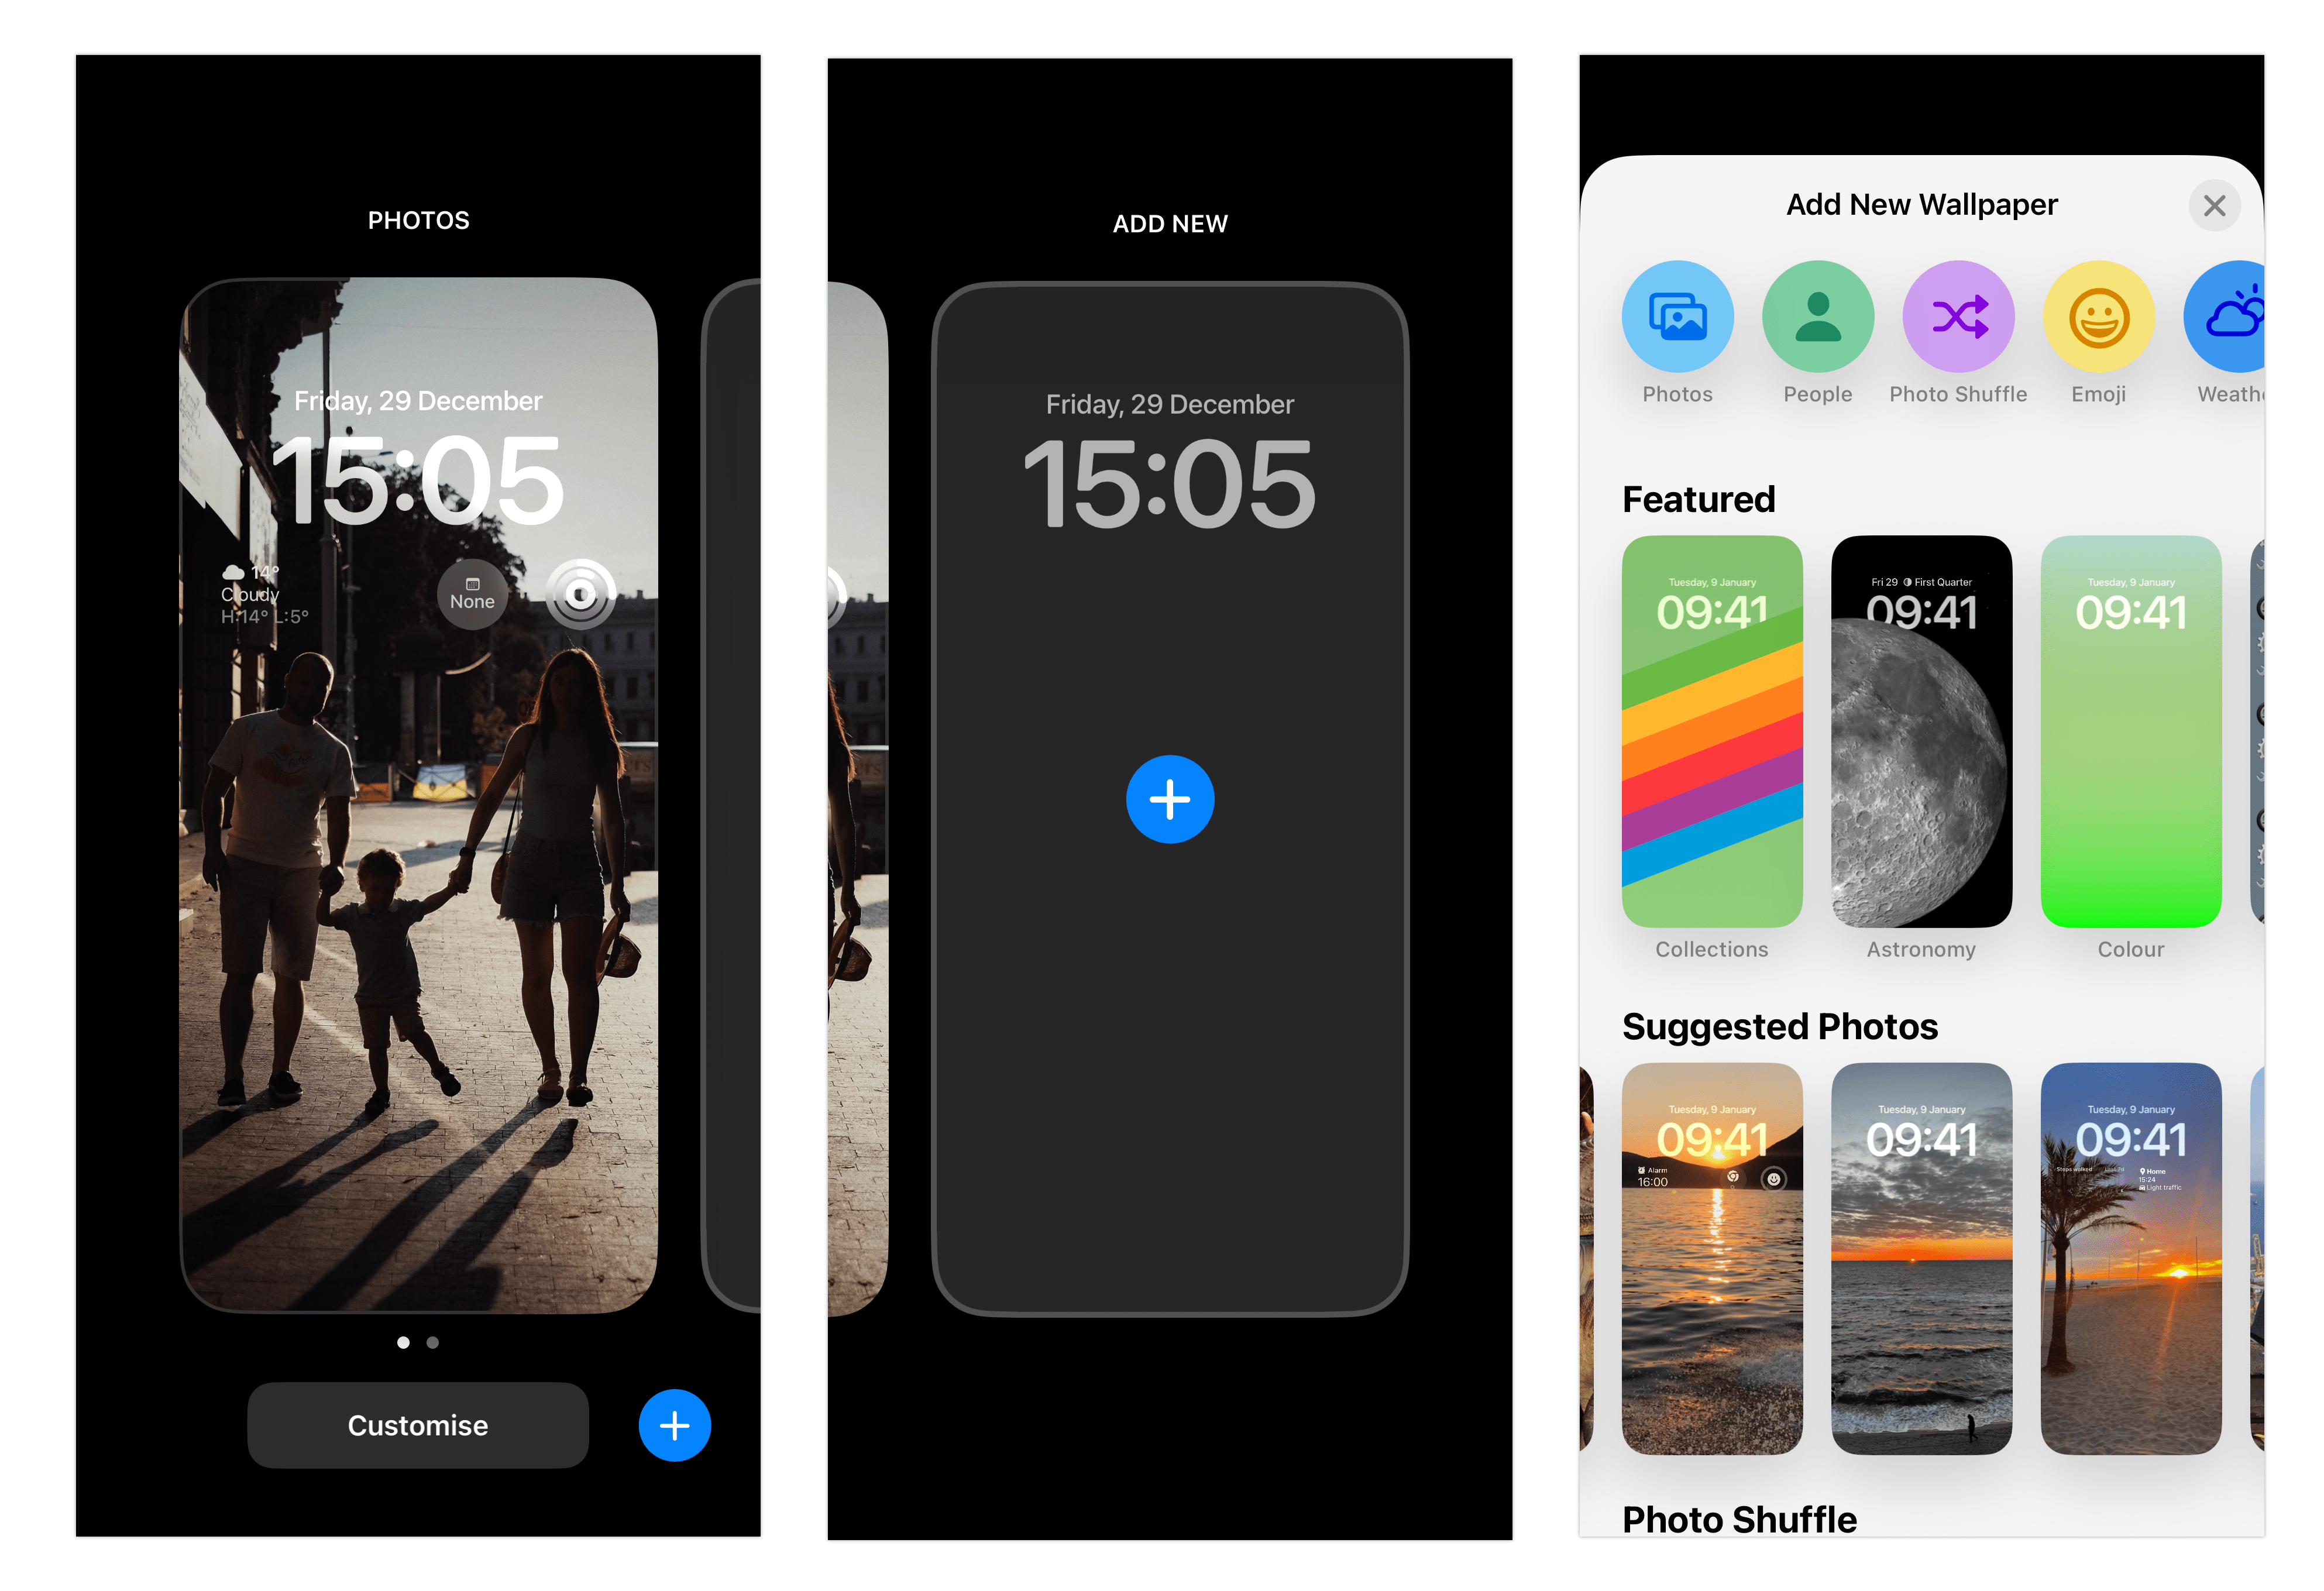 iPhone sreens showing how to change Lock Screen wallpaper